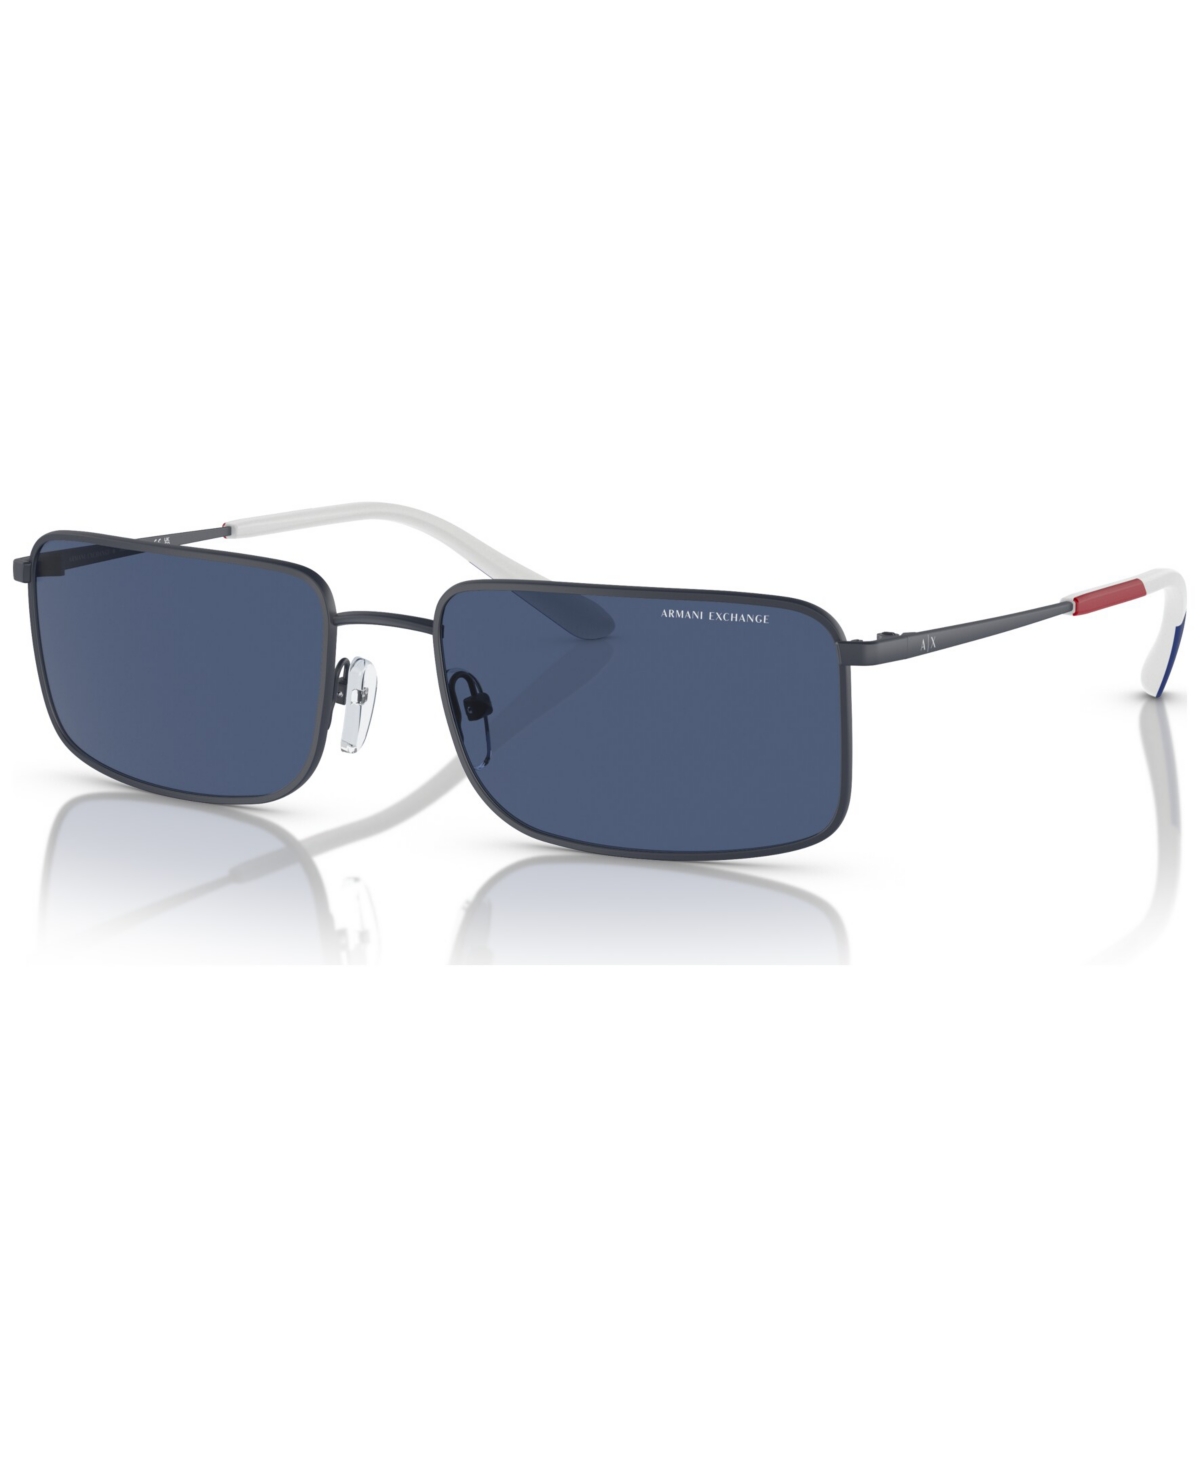 Ax Armani Exchange Men's Sunglasses, Ax2044s In Matte Blue